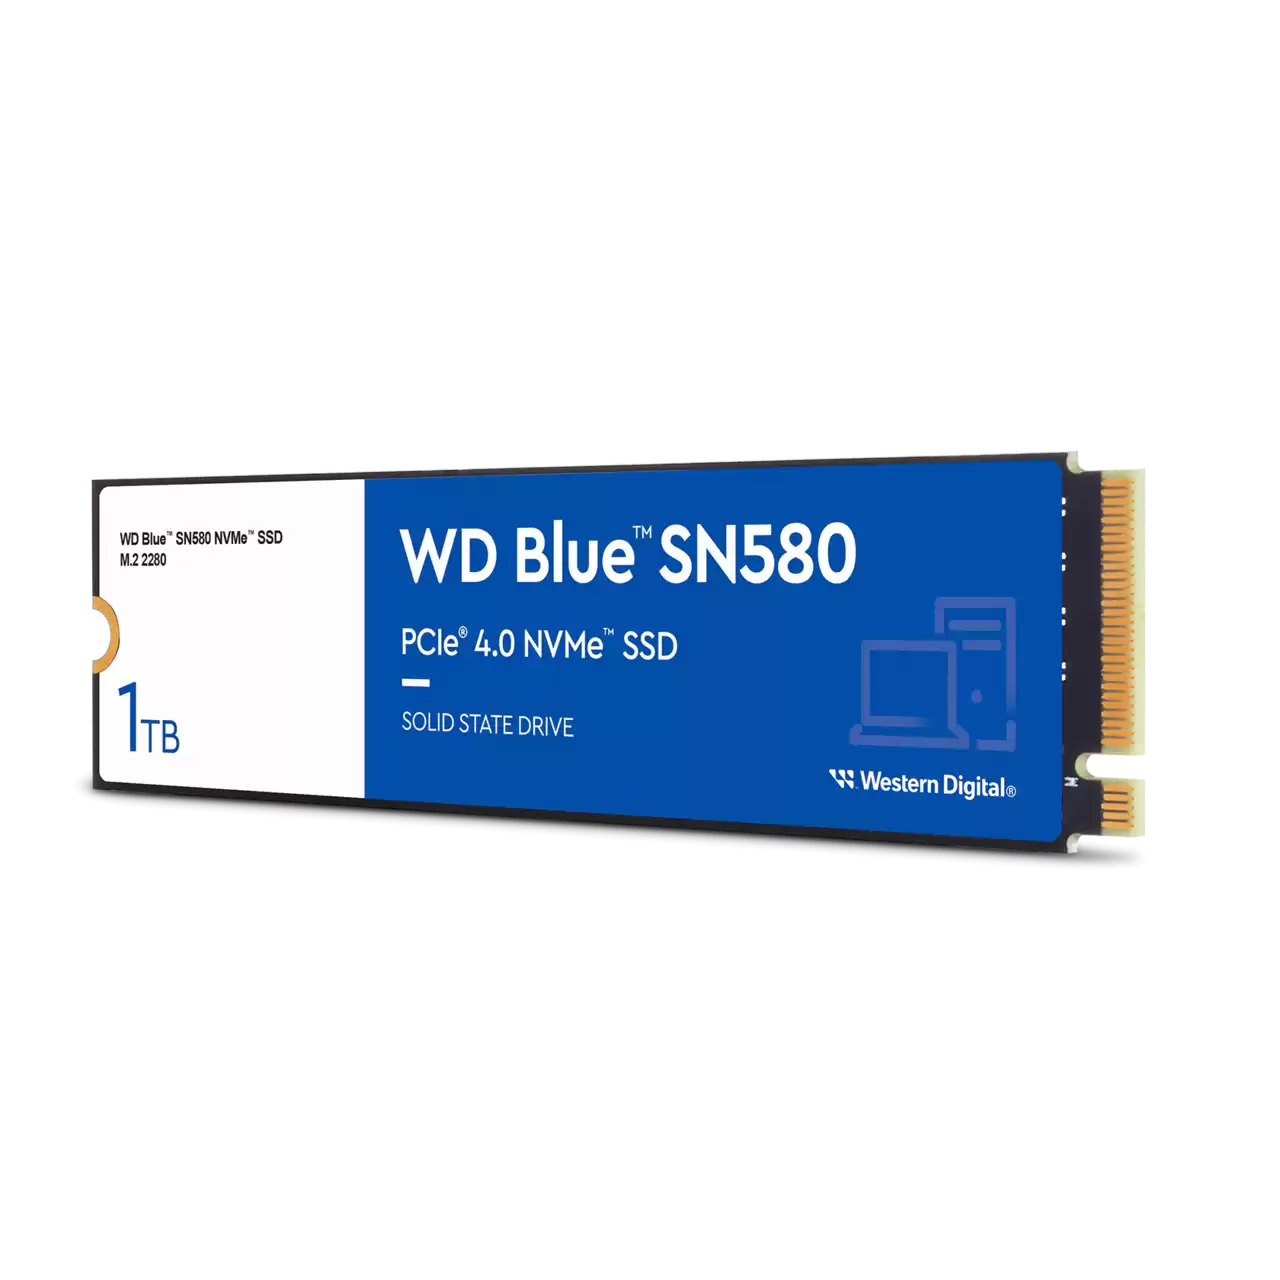 Western Digital 1TB WD Blue SN580 NVMe SSD Gen4 x4 PCIe 16Gb/s M.2 2280 Internal Hard Drive (Brand New)